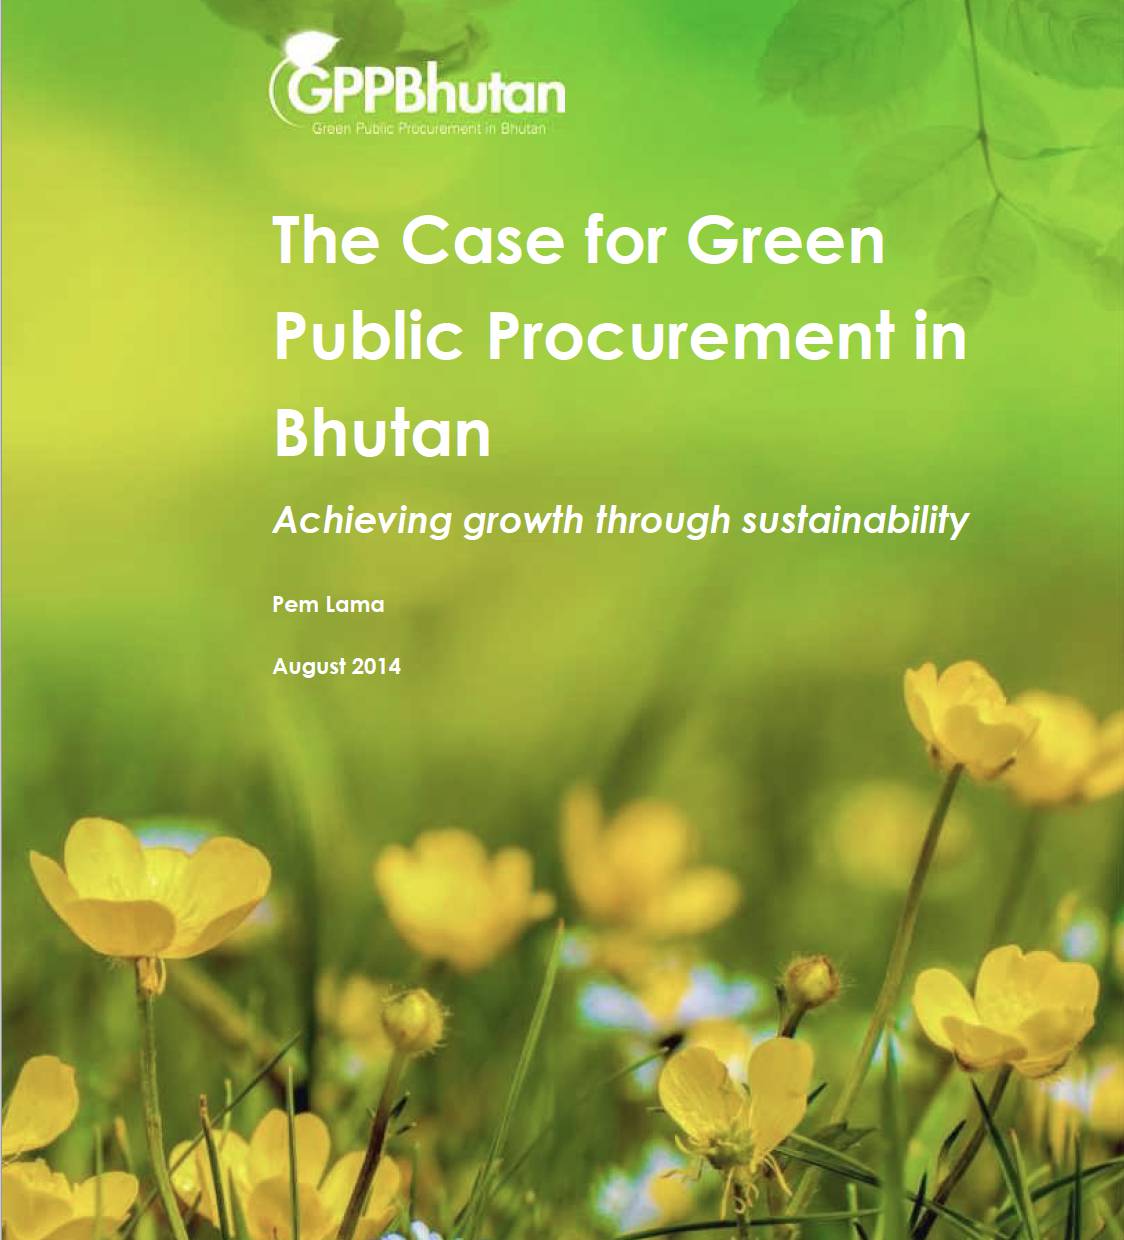 The Case of Green Public Procurement in Bhutan